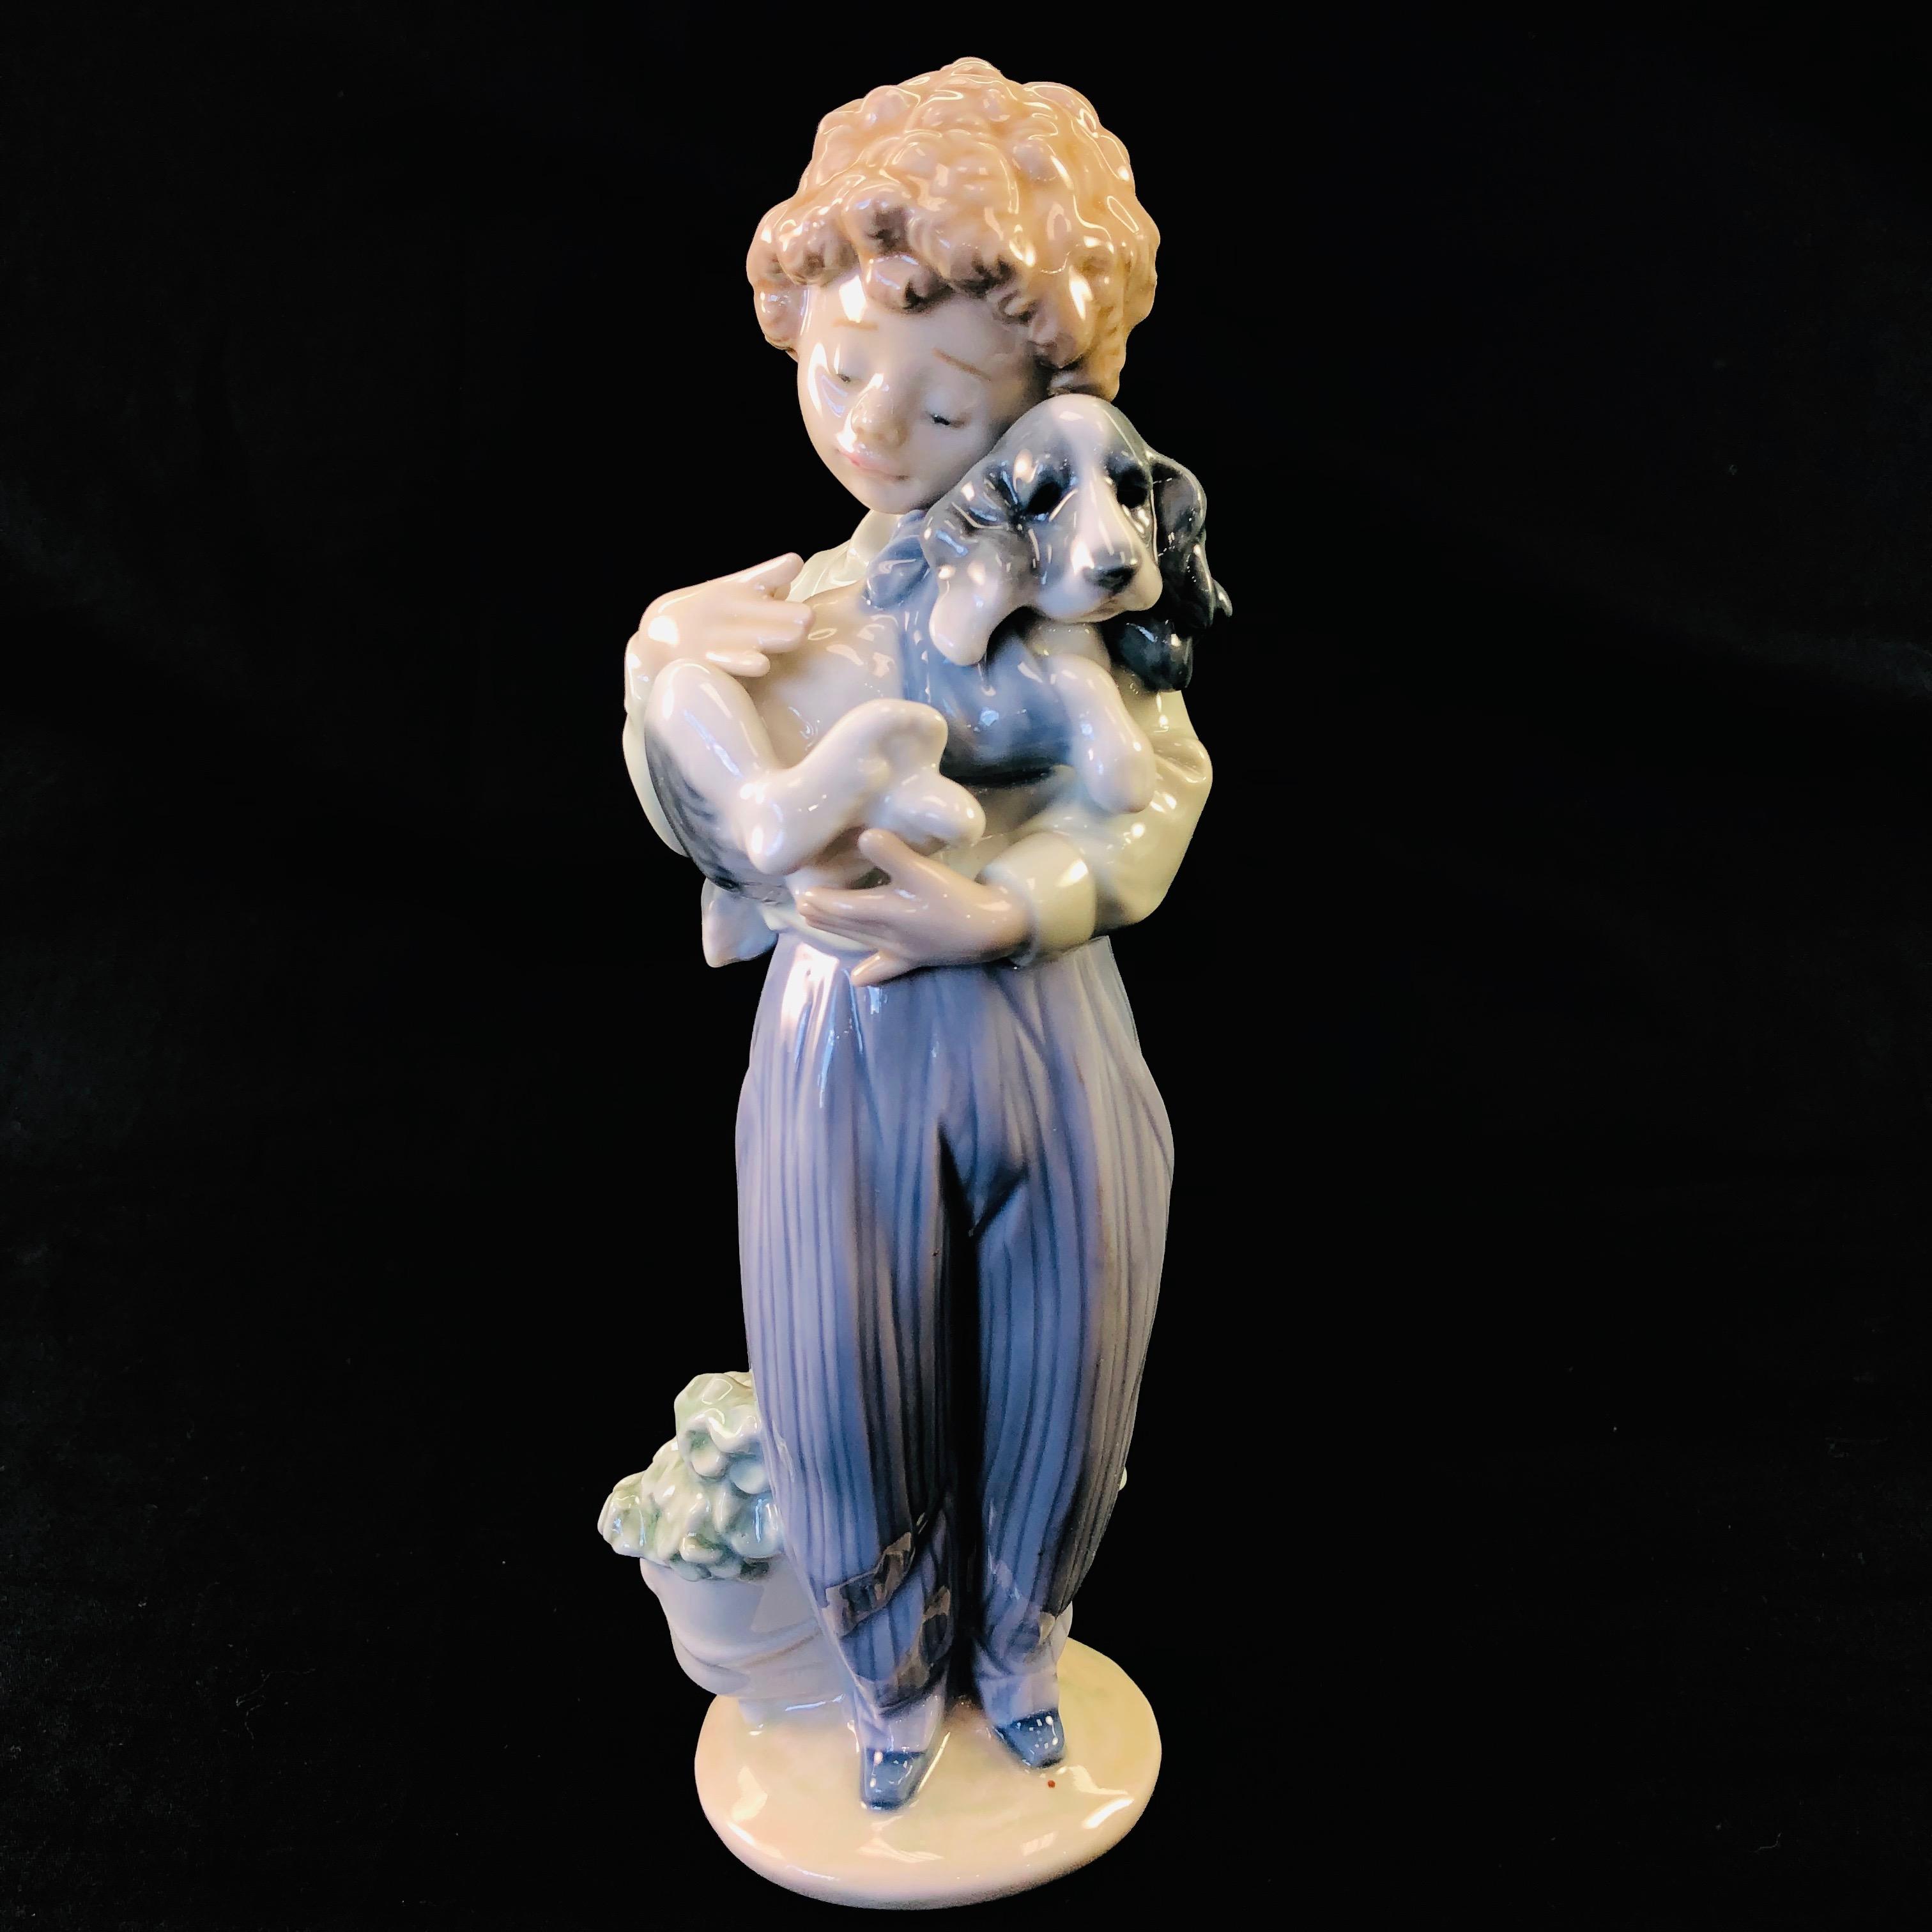 Estate Lladro #7609 "My Buddy" porcelain figurine with original box